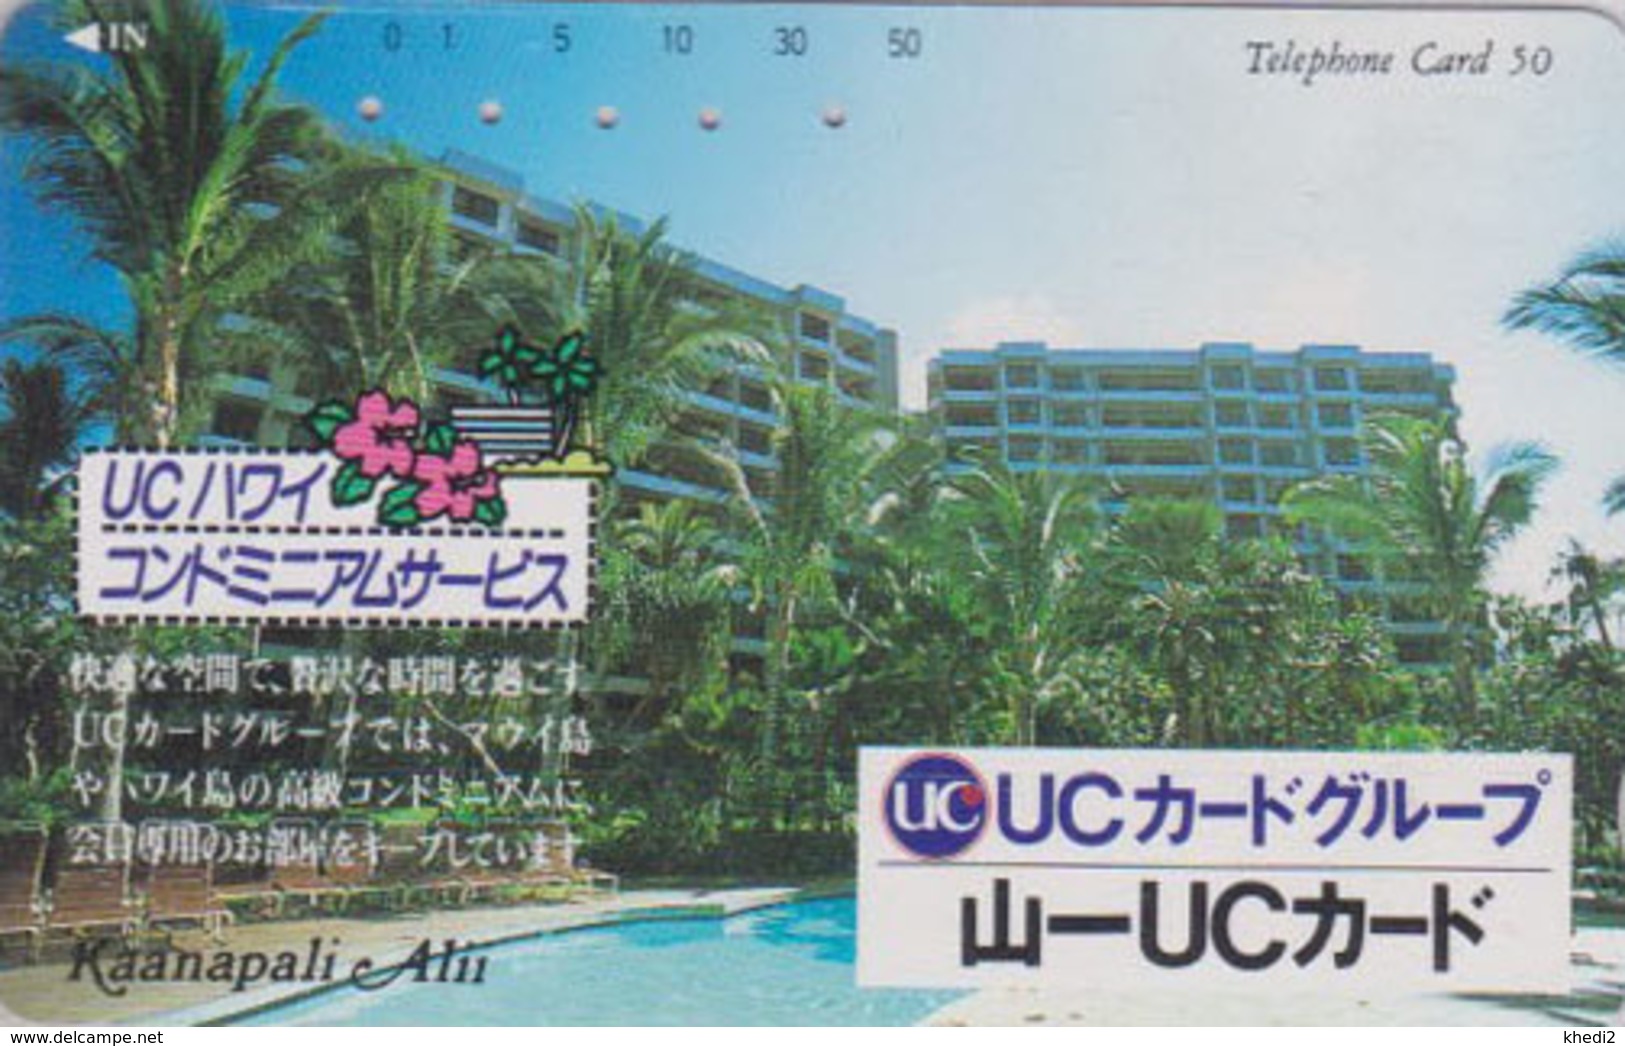 Télécarte Japon / 110-117617 - HAWAII - KAANAPALI - UC BANK CREDIT CARD / Modèle 1 - Japan Phonecard - Site USA 459 - Sellos & Monedas